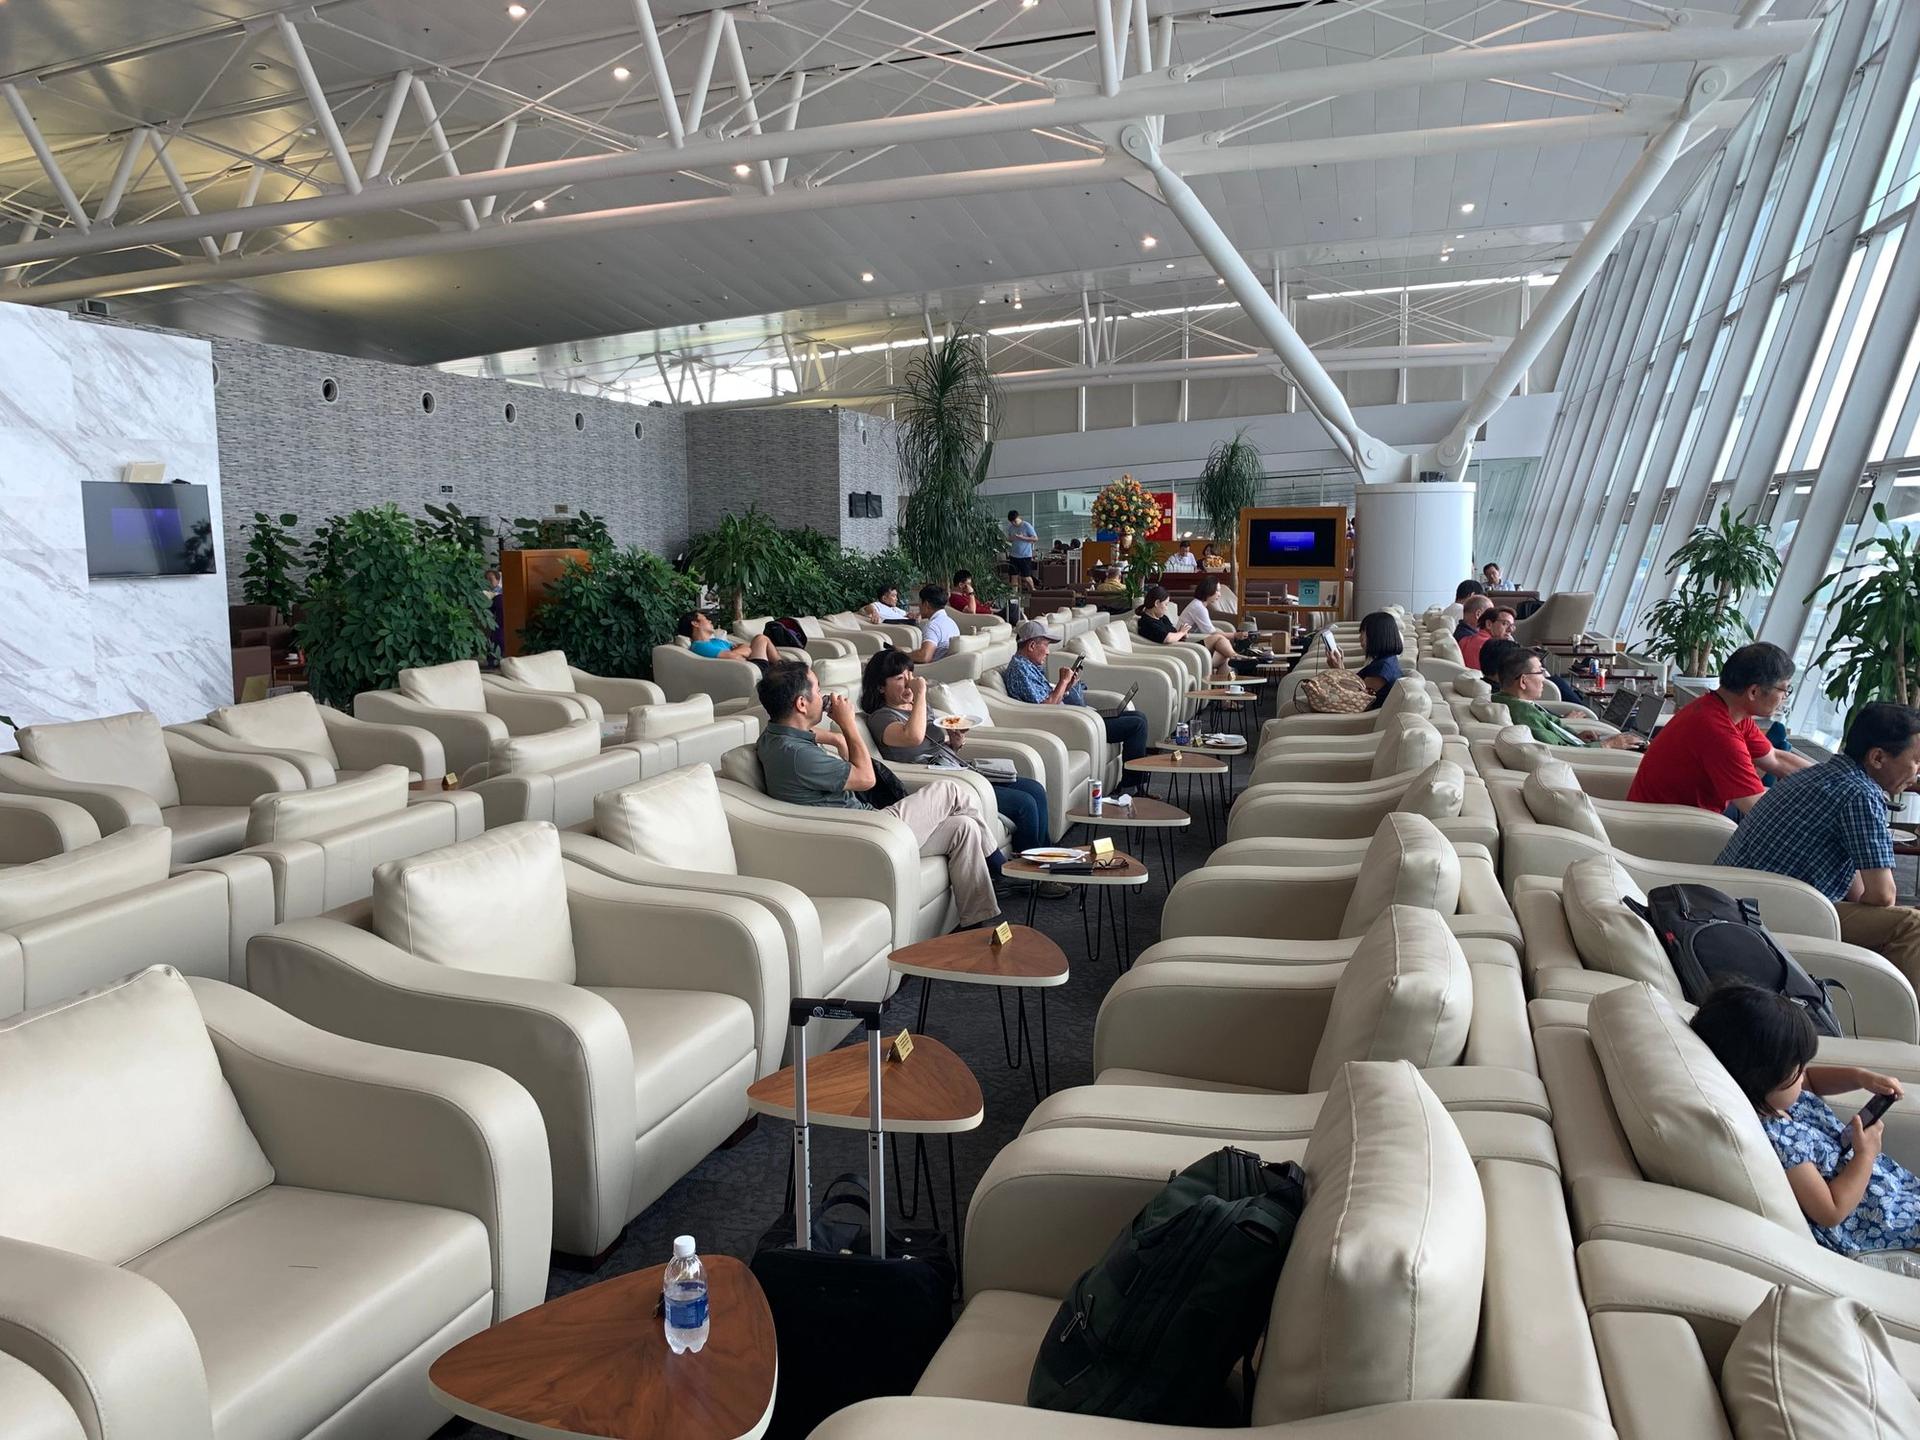 Noi Bai International Airport Business Lounge image 19 of 26